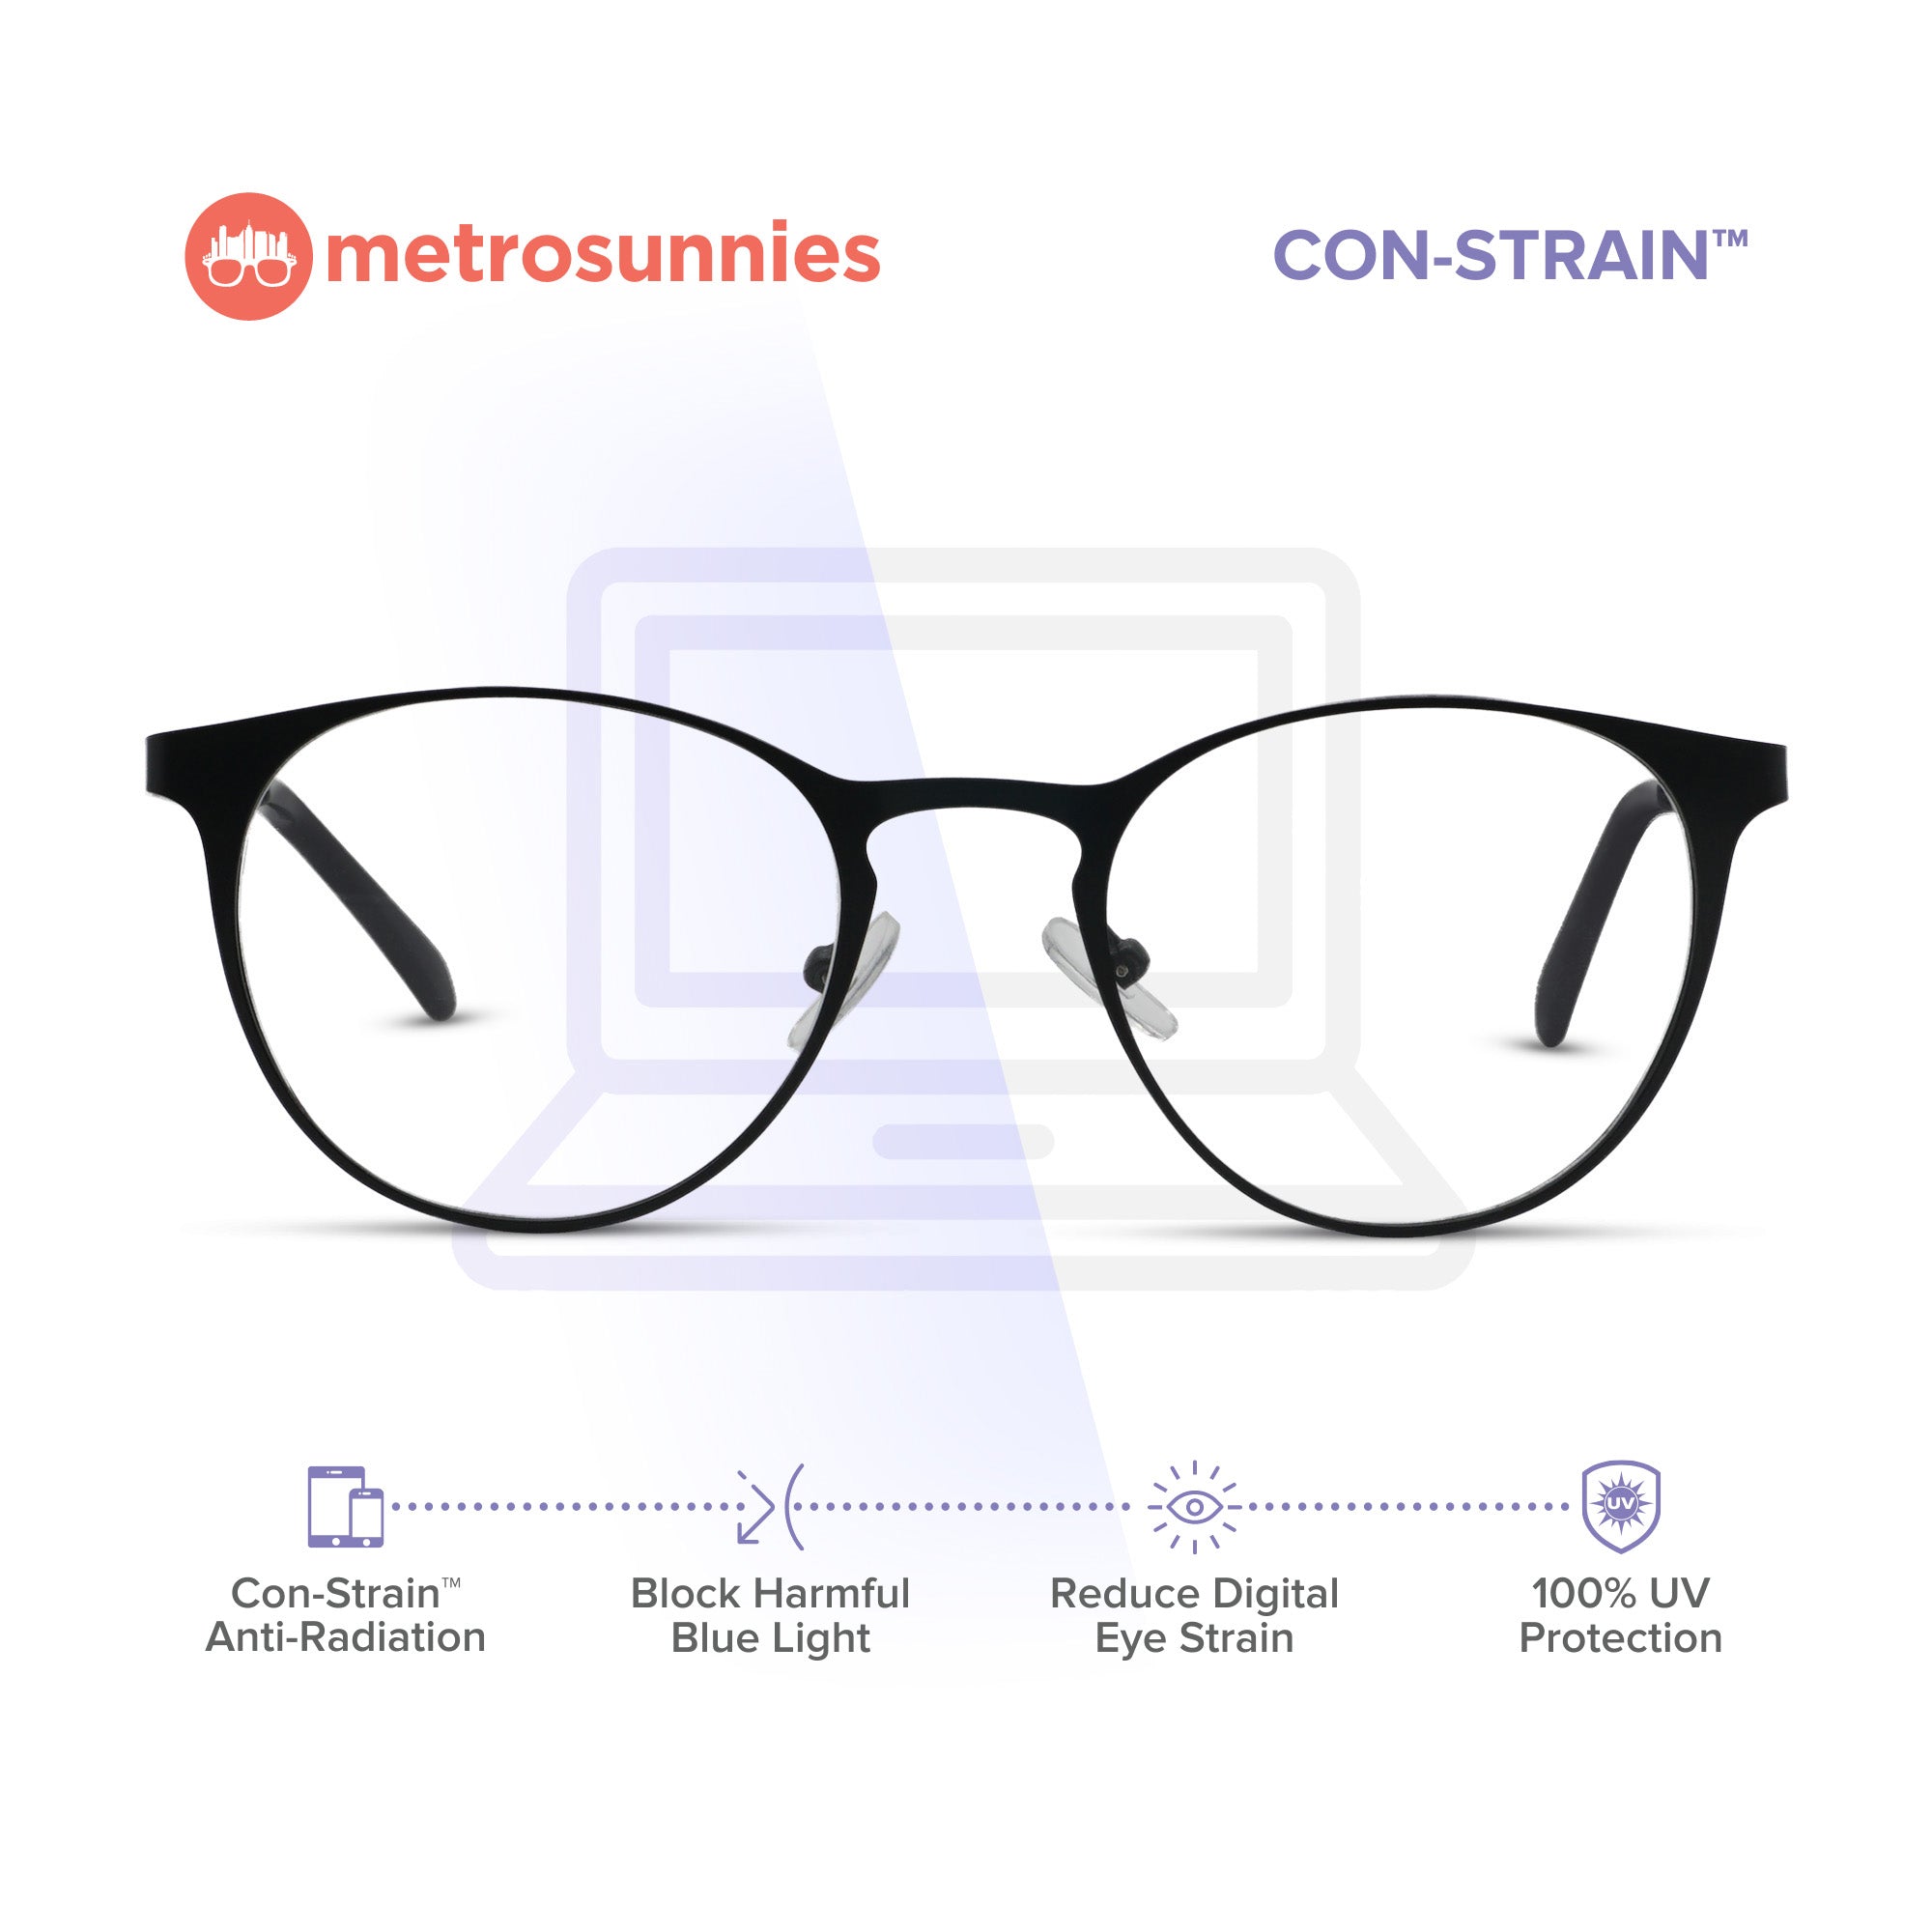 MetroSunnies Geri Specs (Black) / Con-Strain Blue Light / Anti-Radiation Computer Eyeglasses